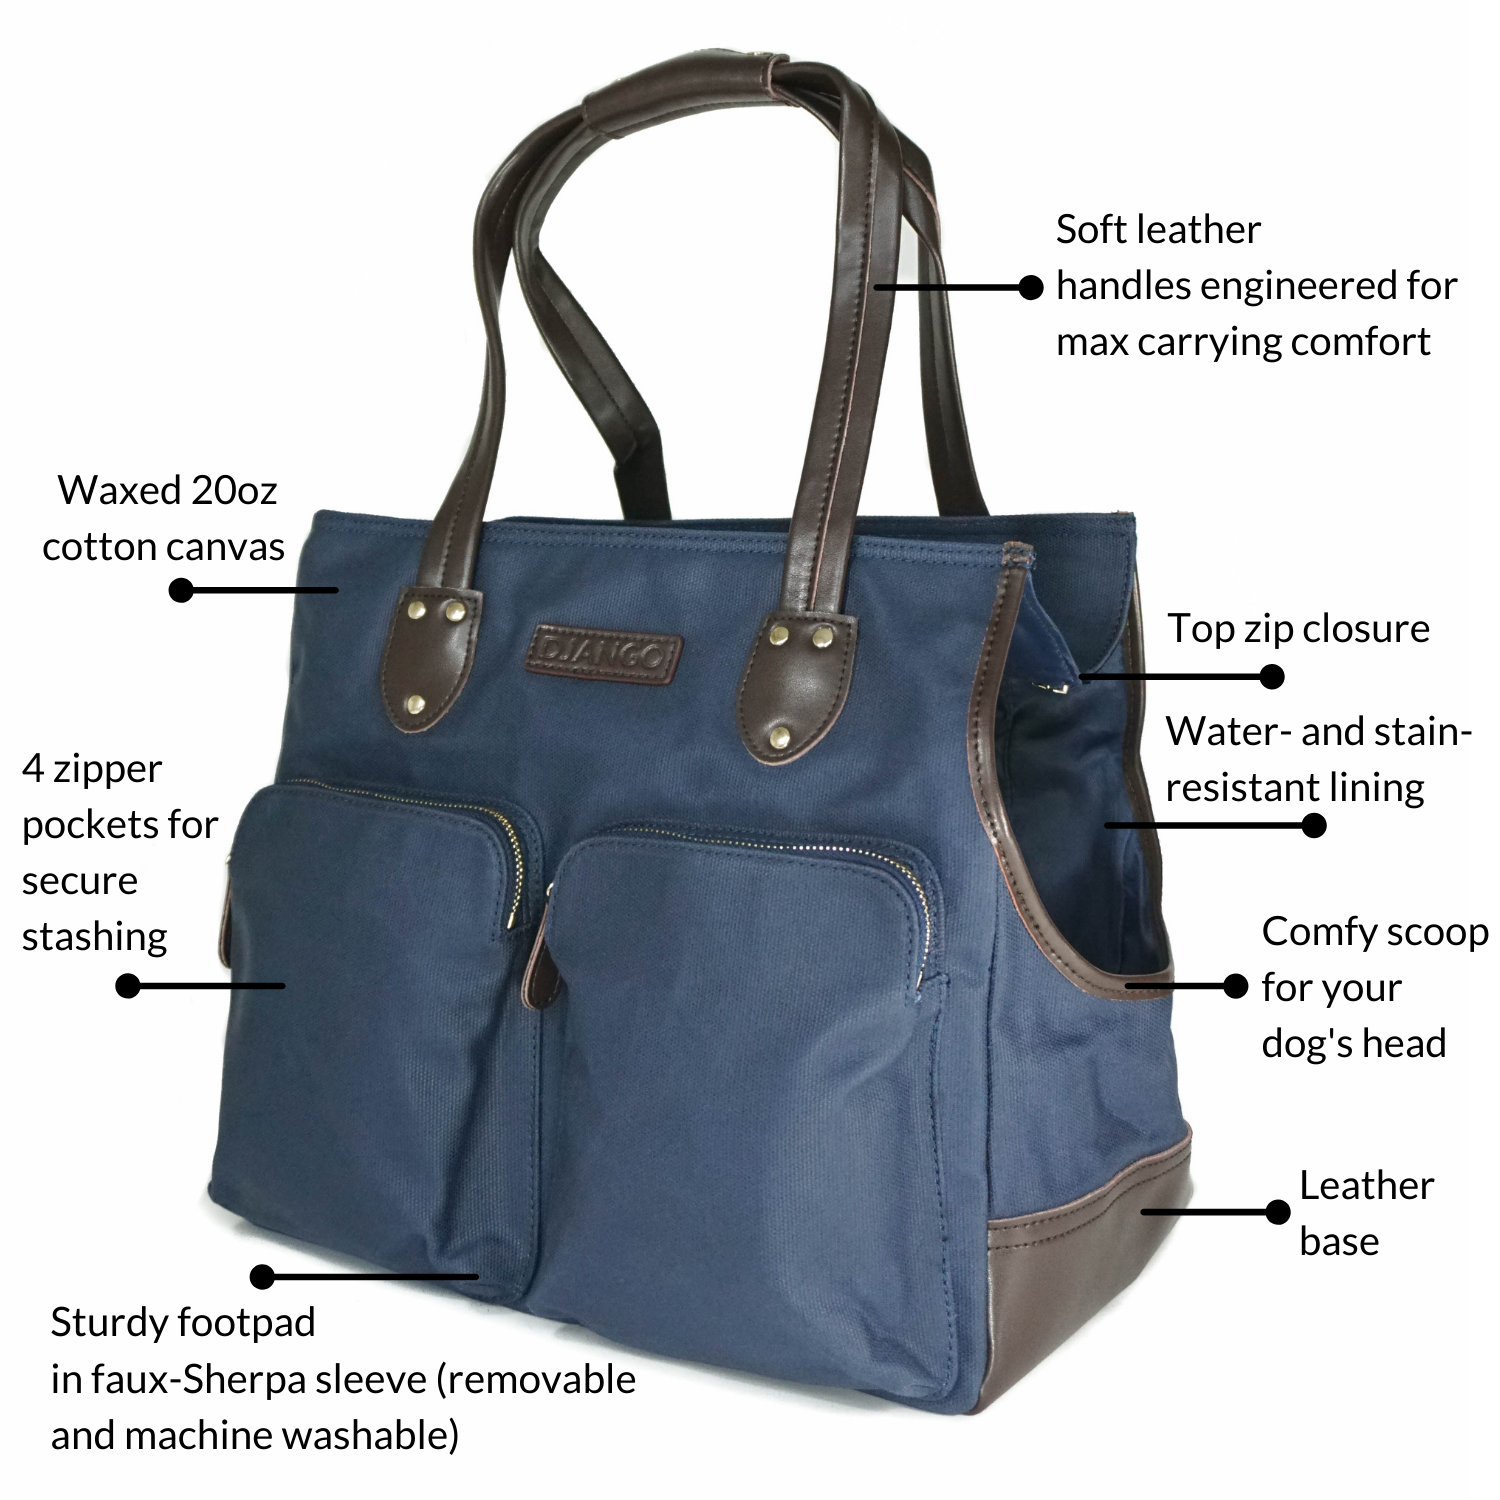 DJANGO Dog Carrier Bag - Waxed Canvas & Leather Dog Carry Bag - Navy Blue